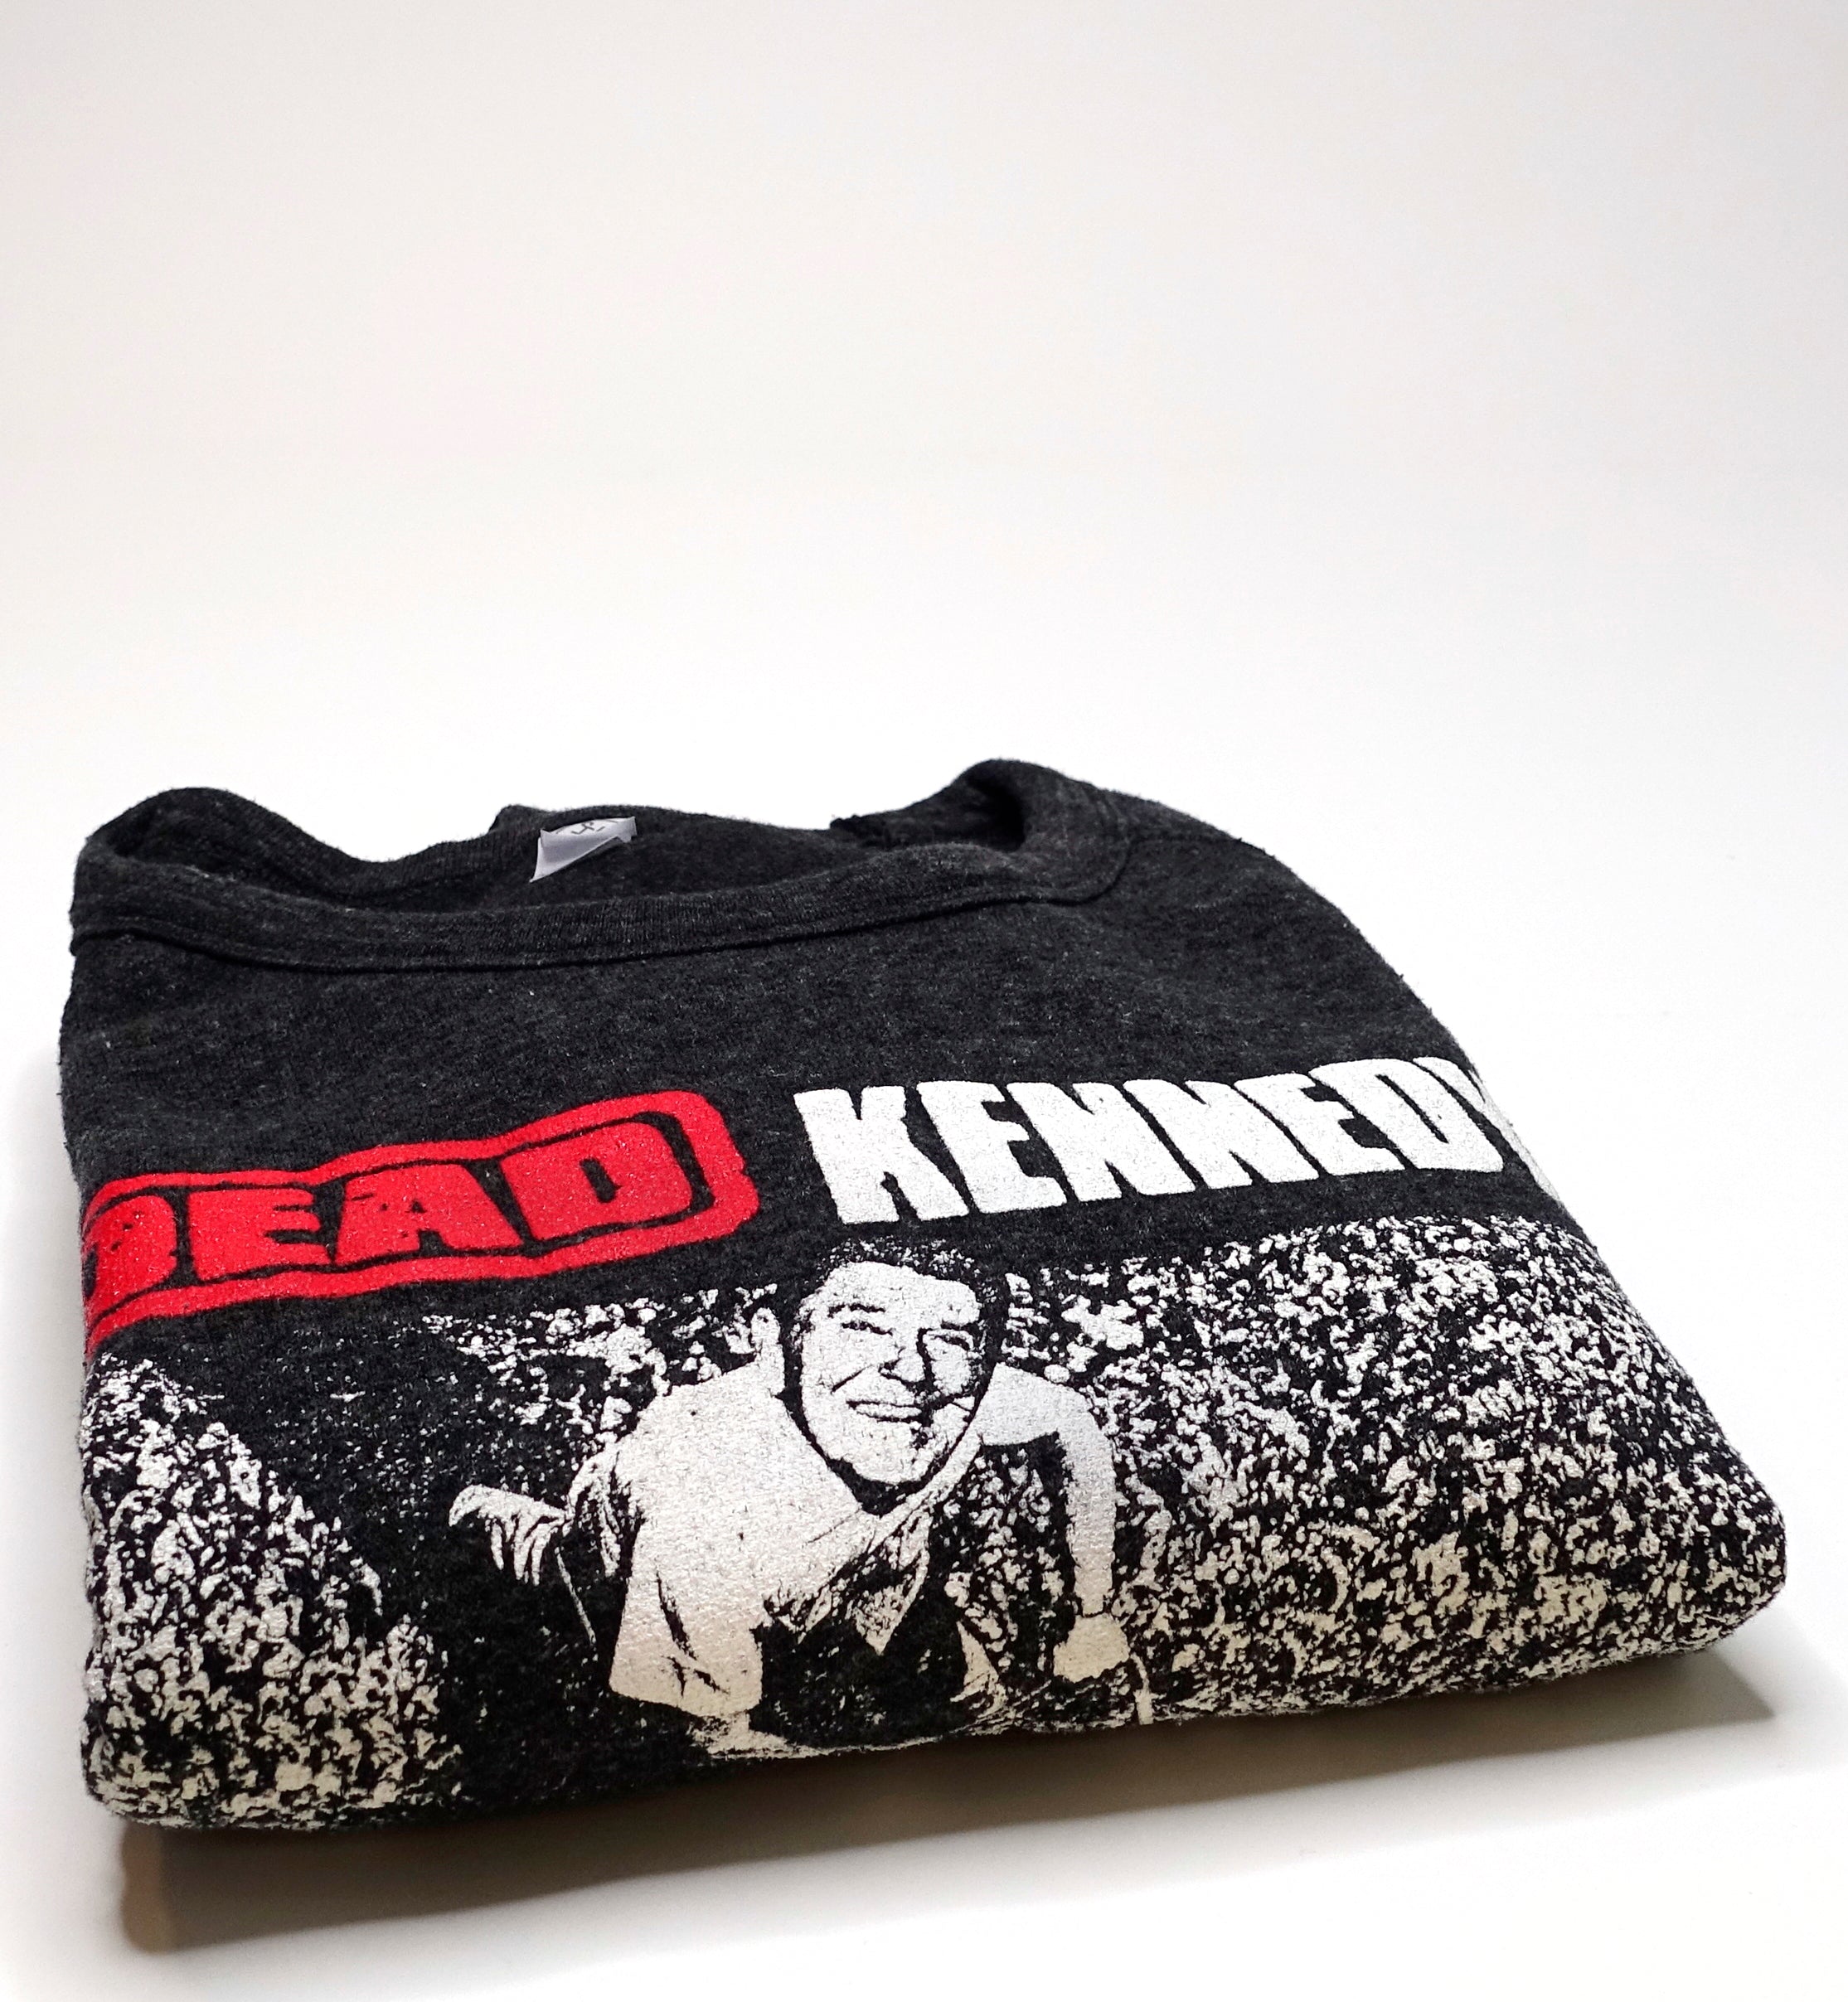 Dead Kennedys - Mowing Down Australia '83 Tour (Bootleg By Me) Sweat Shirt Size XL